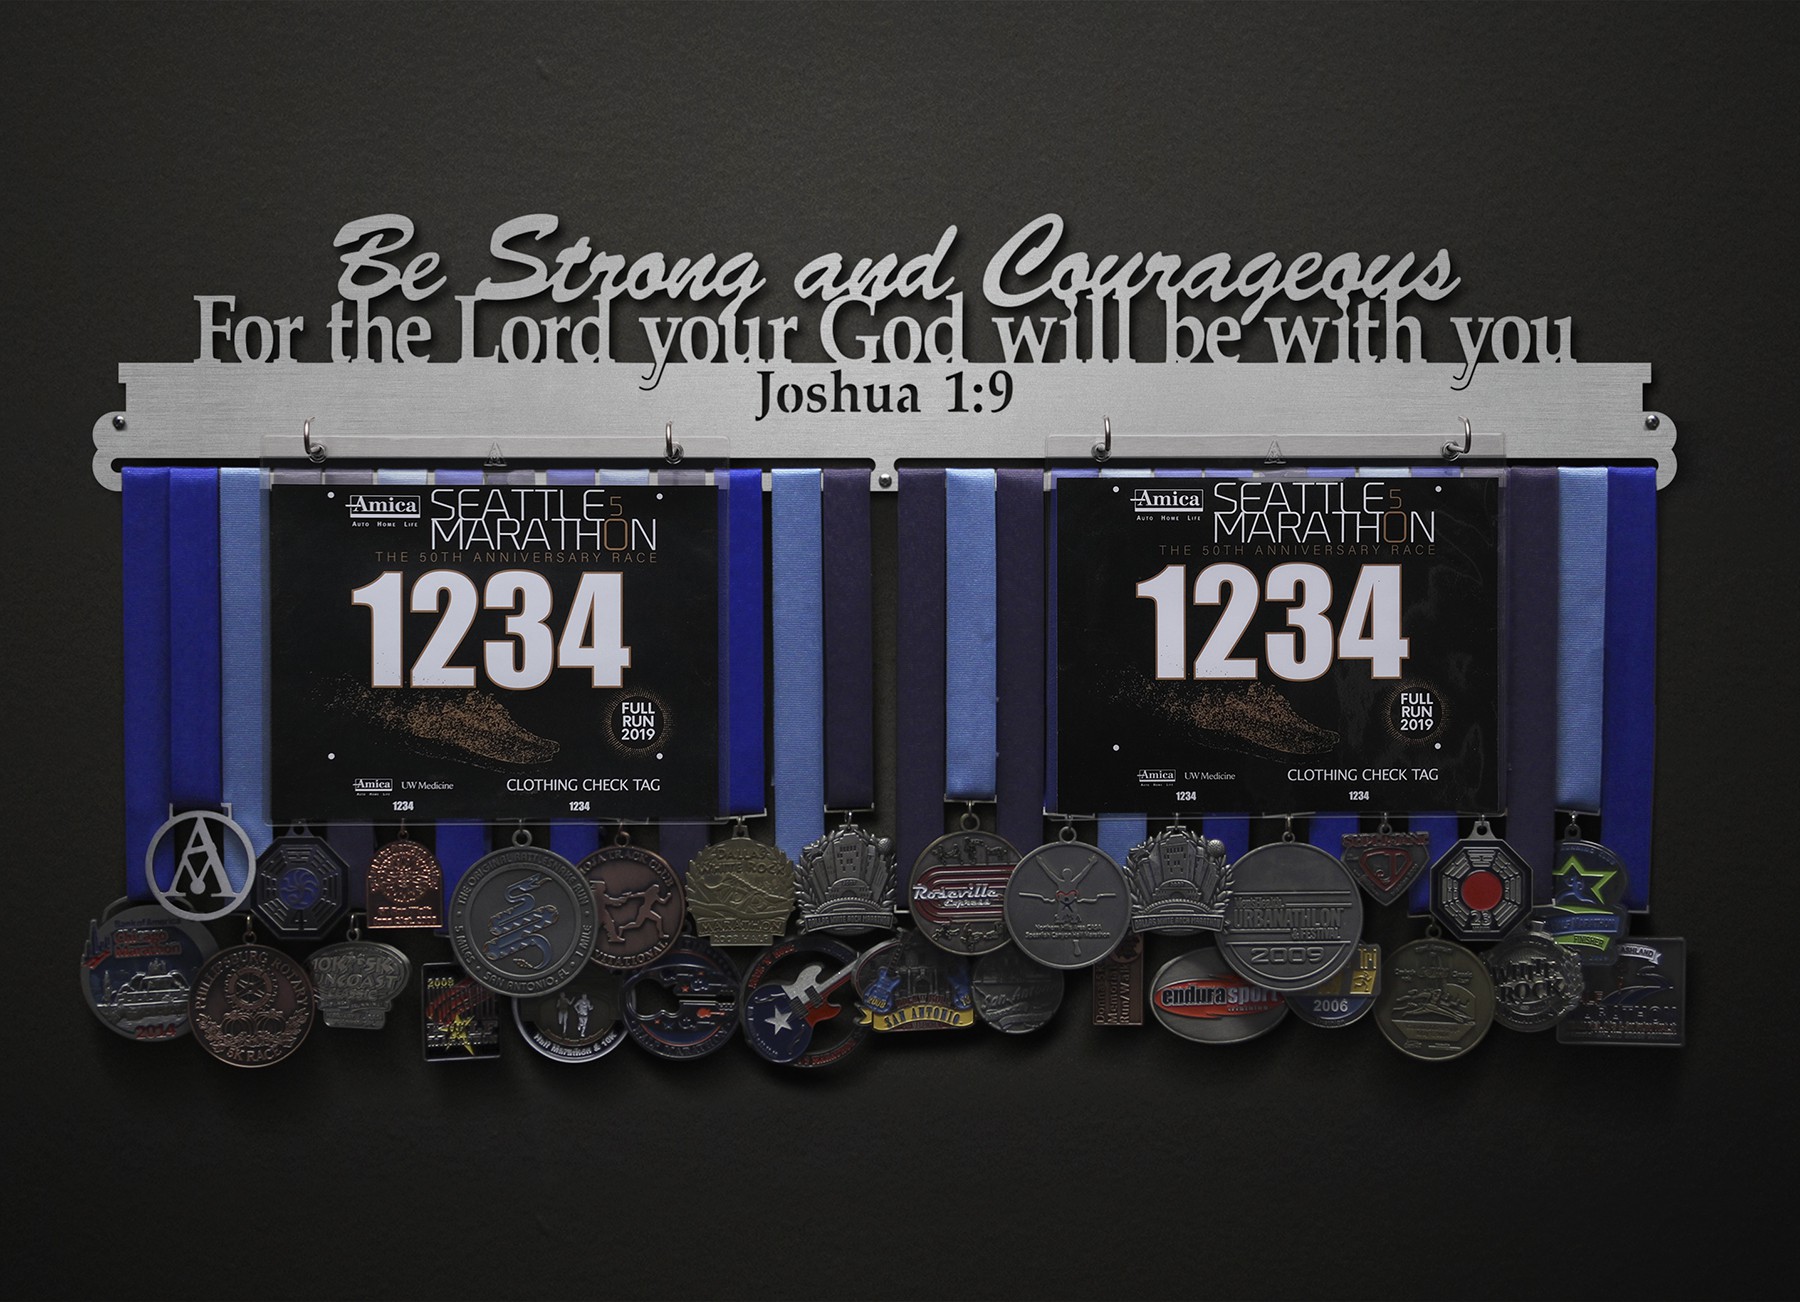 Joshua 1:9 Bib and Medal Display